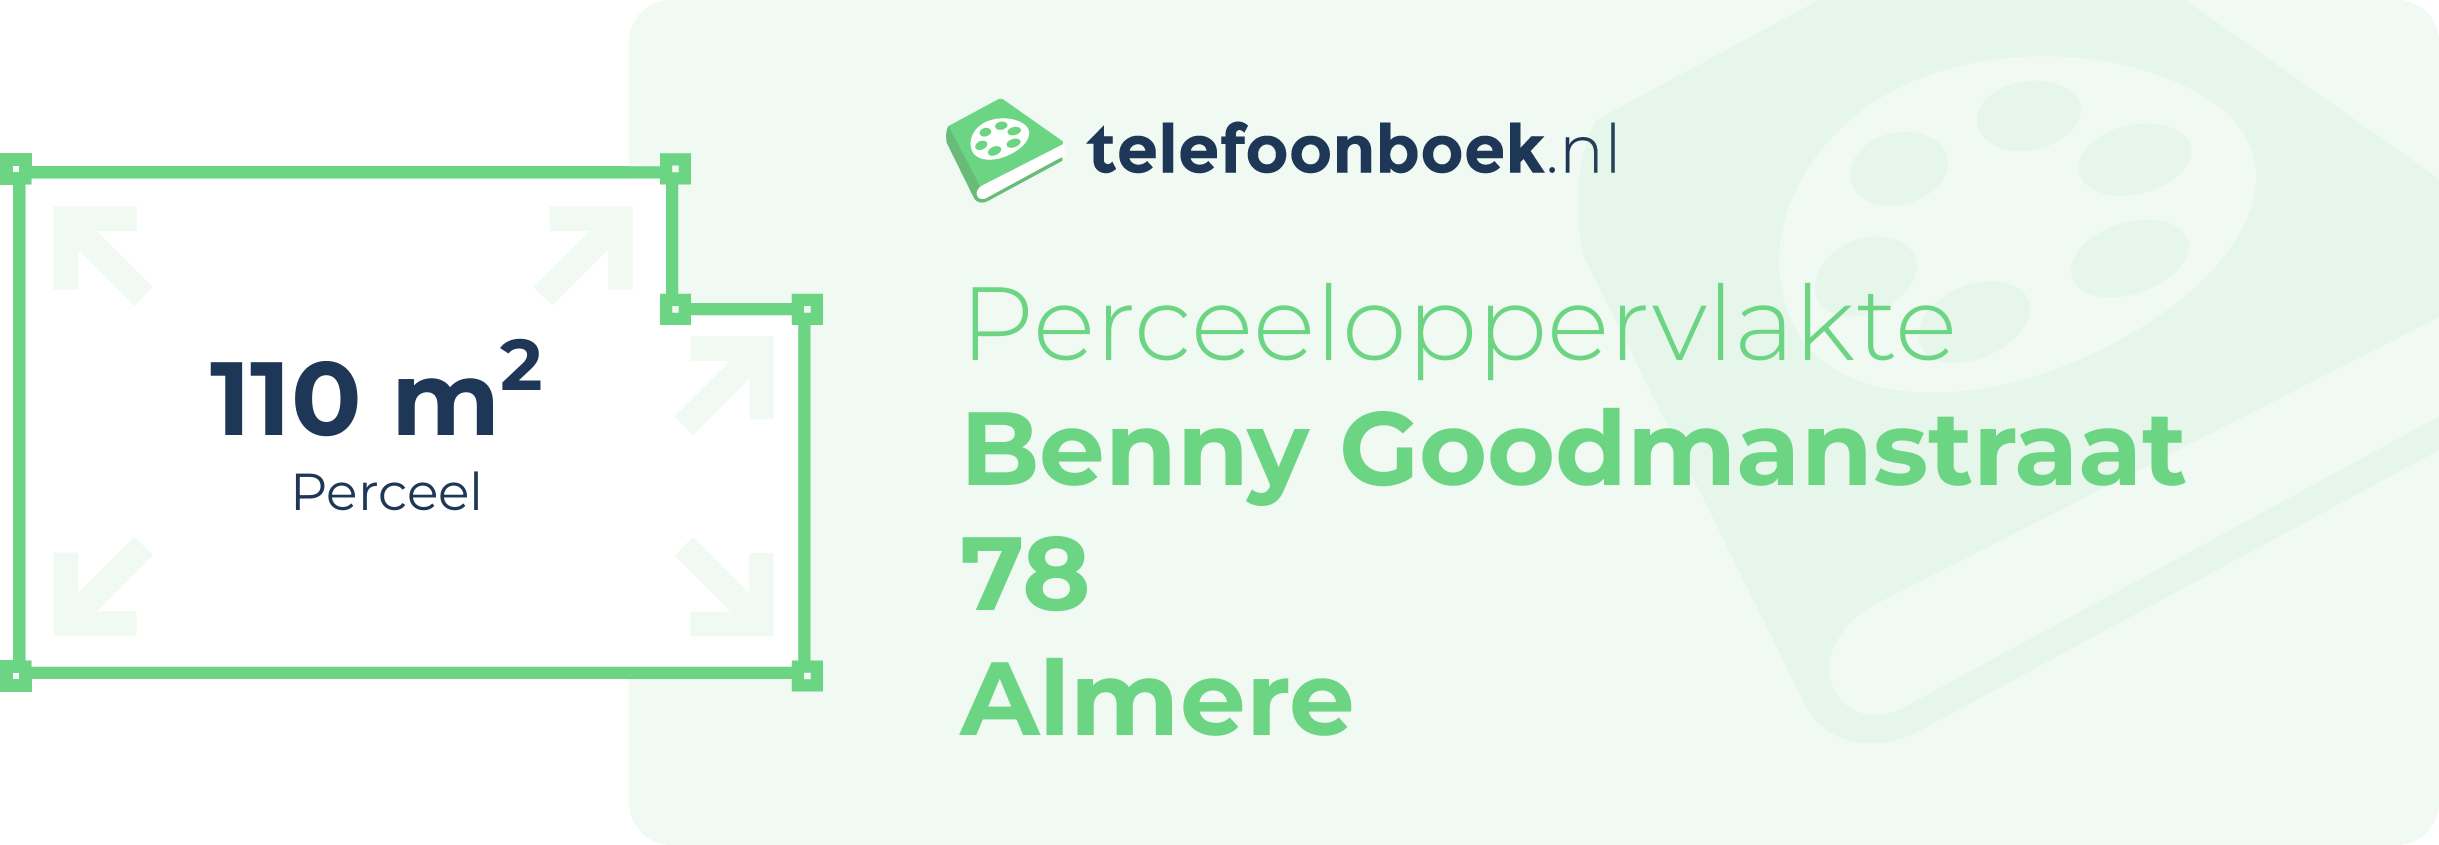 Perceeloppervlakte Benny Goodmanstraat 78 Almere